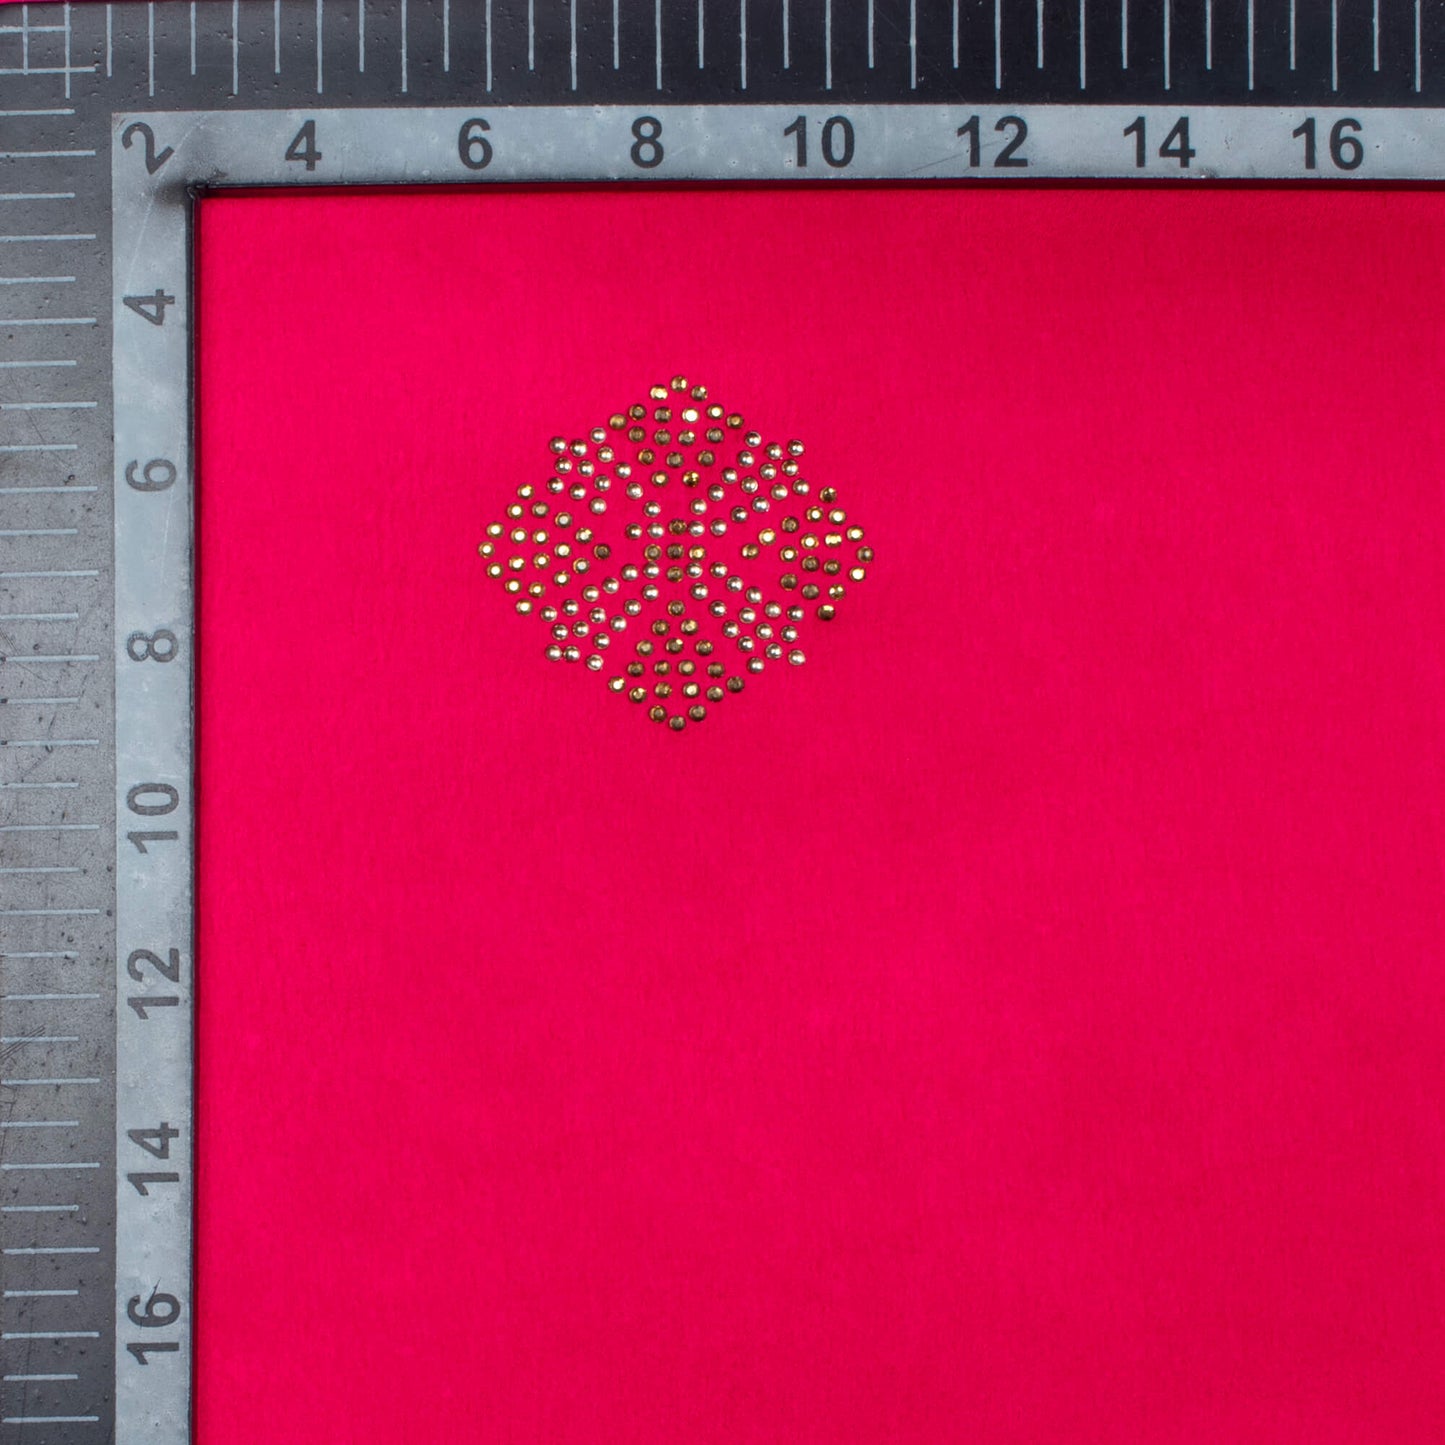 Cerise Pink Geometric Premium Swarovski Hand Work Japan Satin Fabric